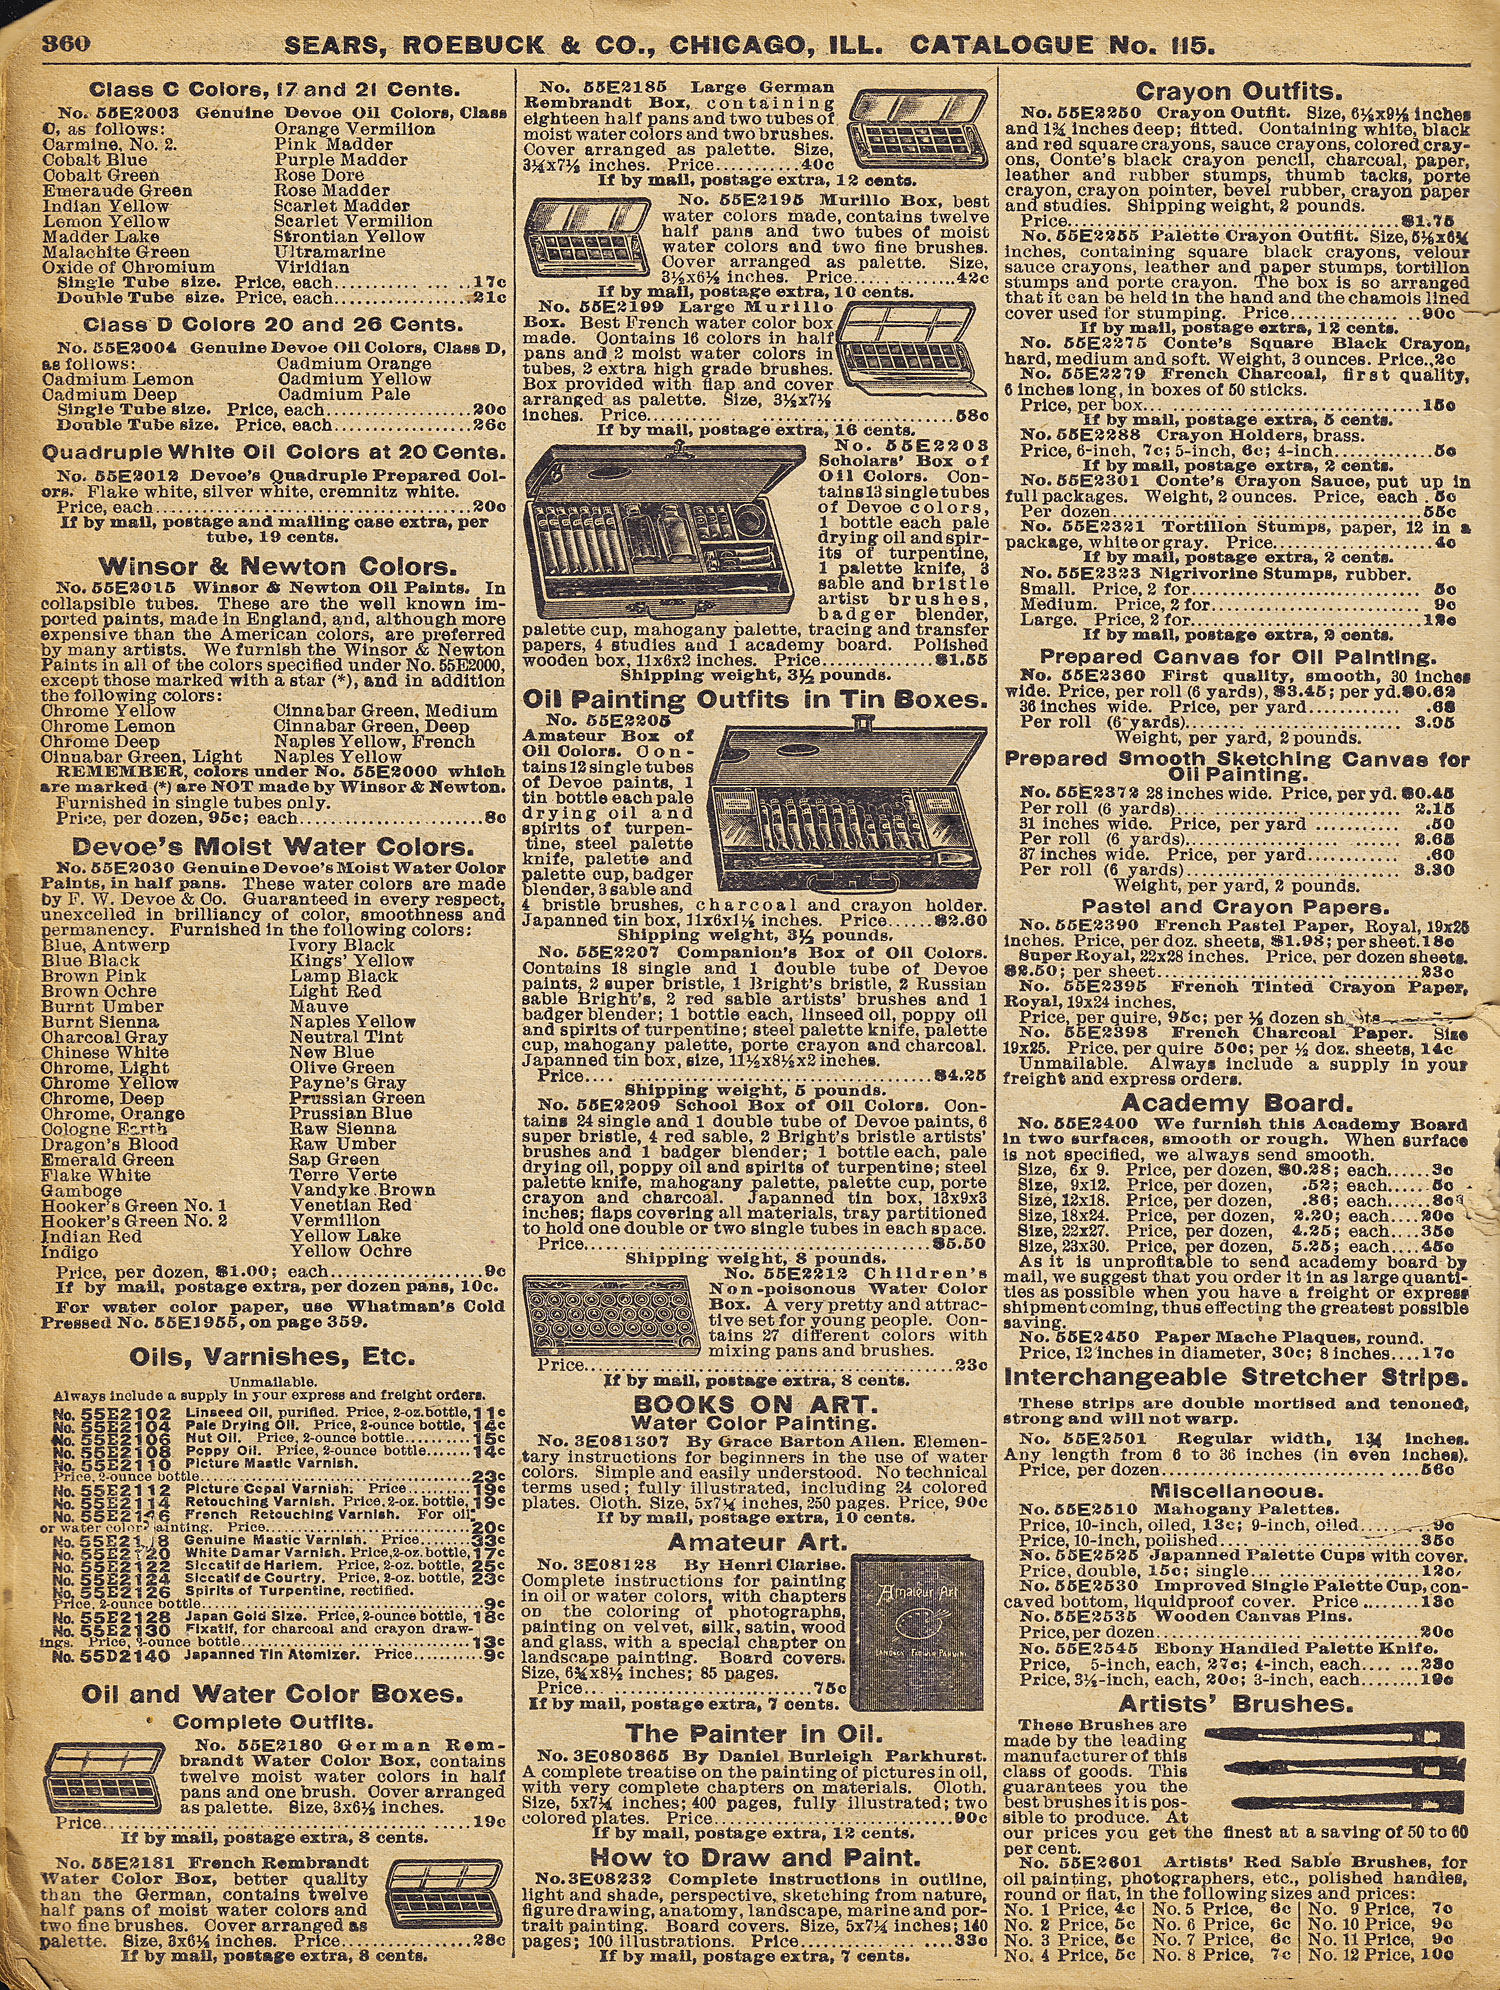 1169.sears.roebuck.catalog.115.1915-360-1500.jpg